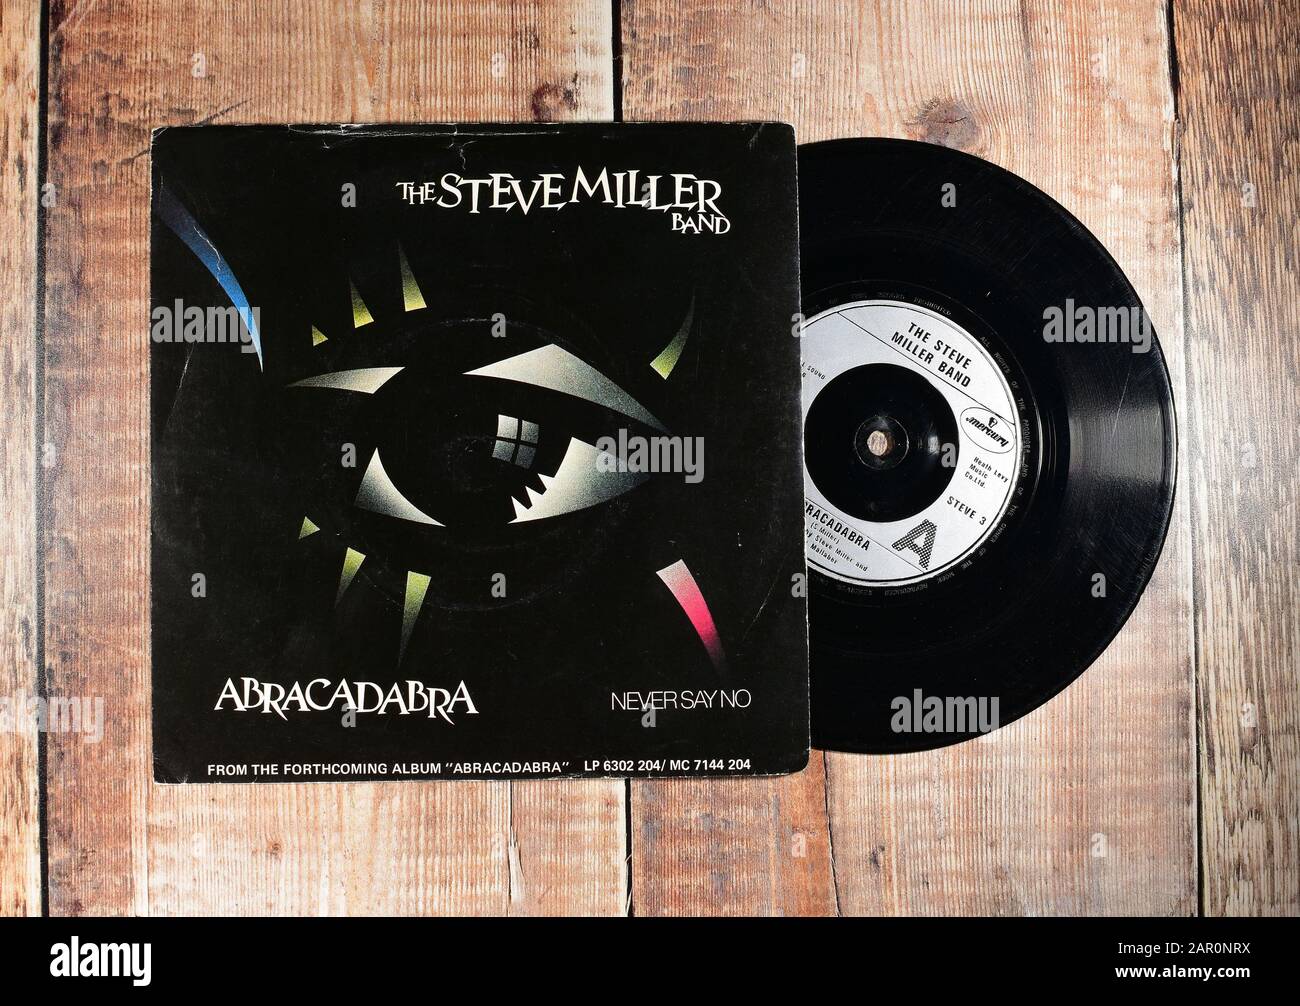 The Steve miller band - Abracadabra 7 inch single Stock Photo - Alamy